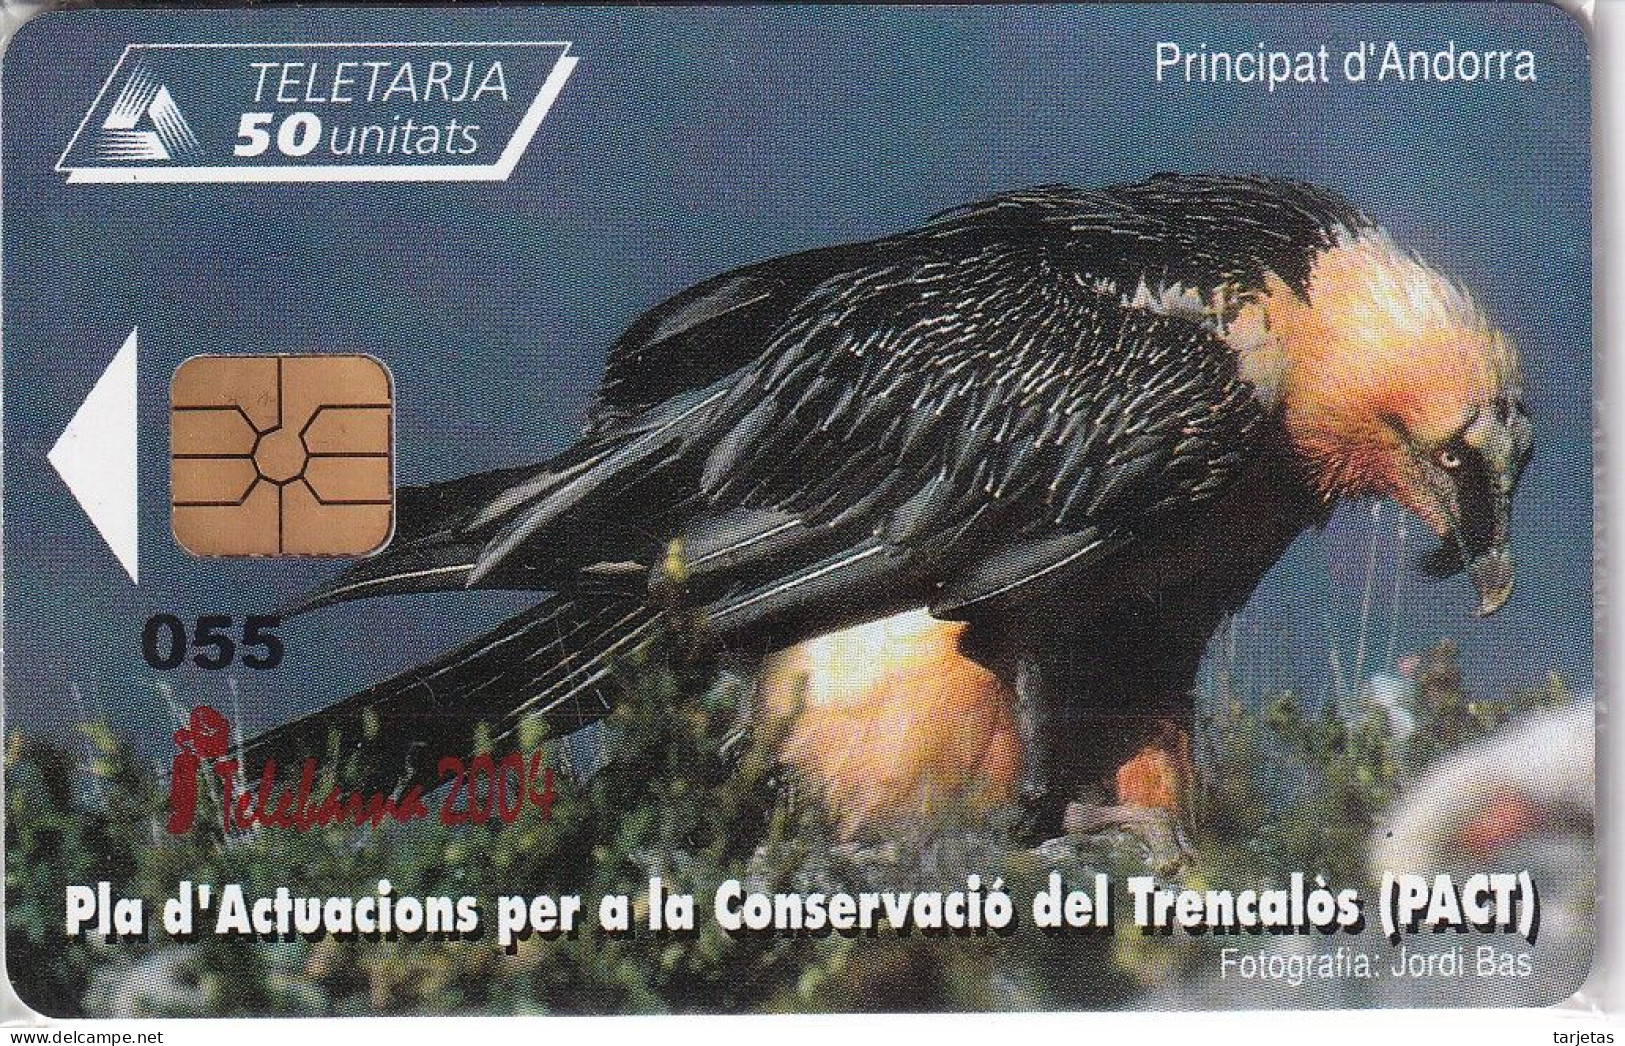 AND-143/a TARJETA DE ANDORRA DEL QUEBRANTAHUESOS (TELEBARNA 2004) (BIRD-PAJARO) NUEVA-MINT CON BLISTER - Andorra